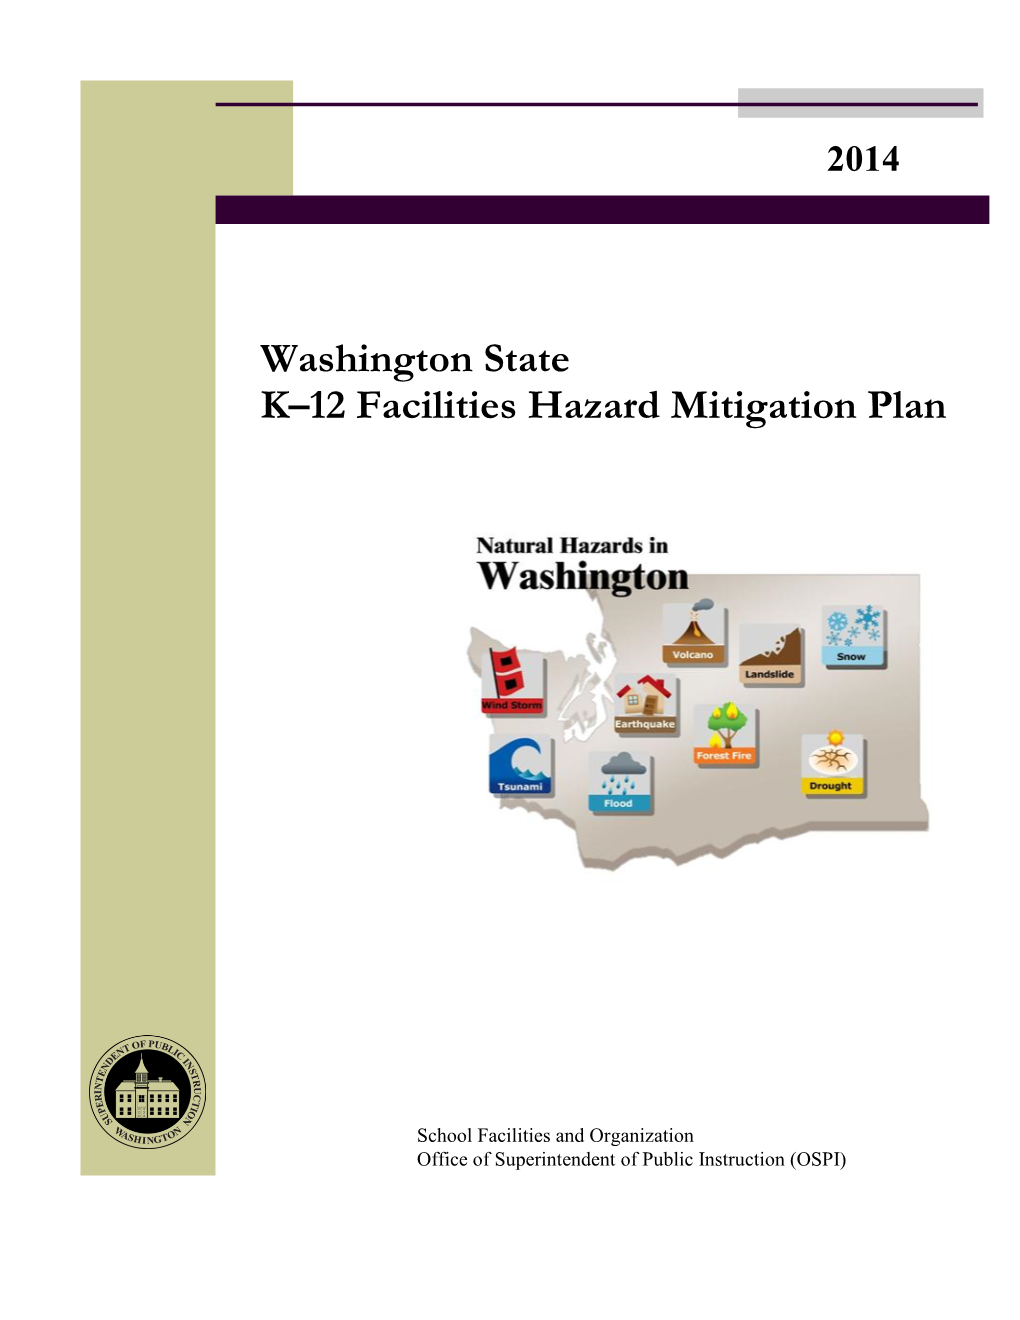 Washington State K-12 Facilities Hazard Mitigation Plan